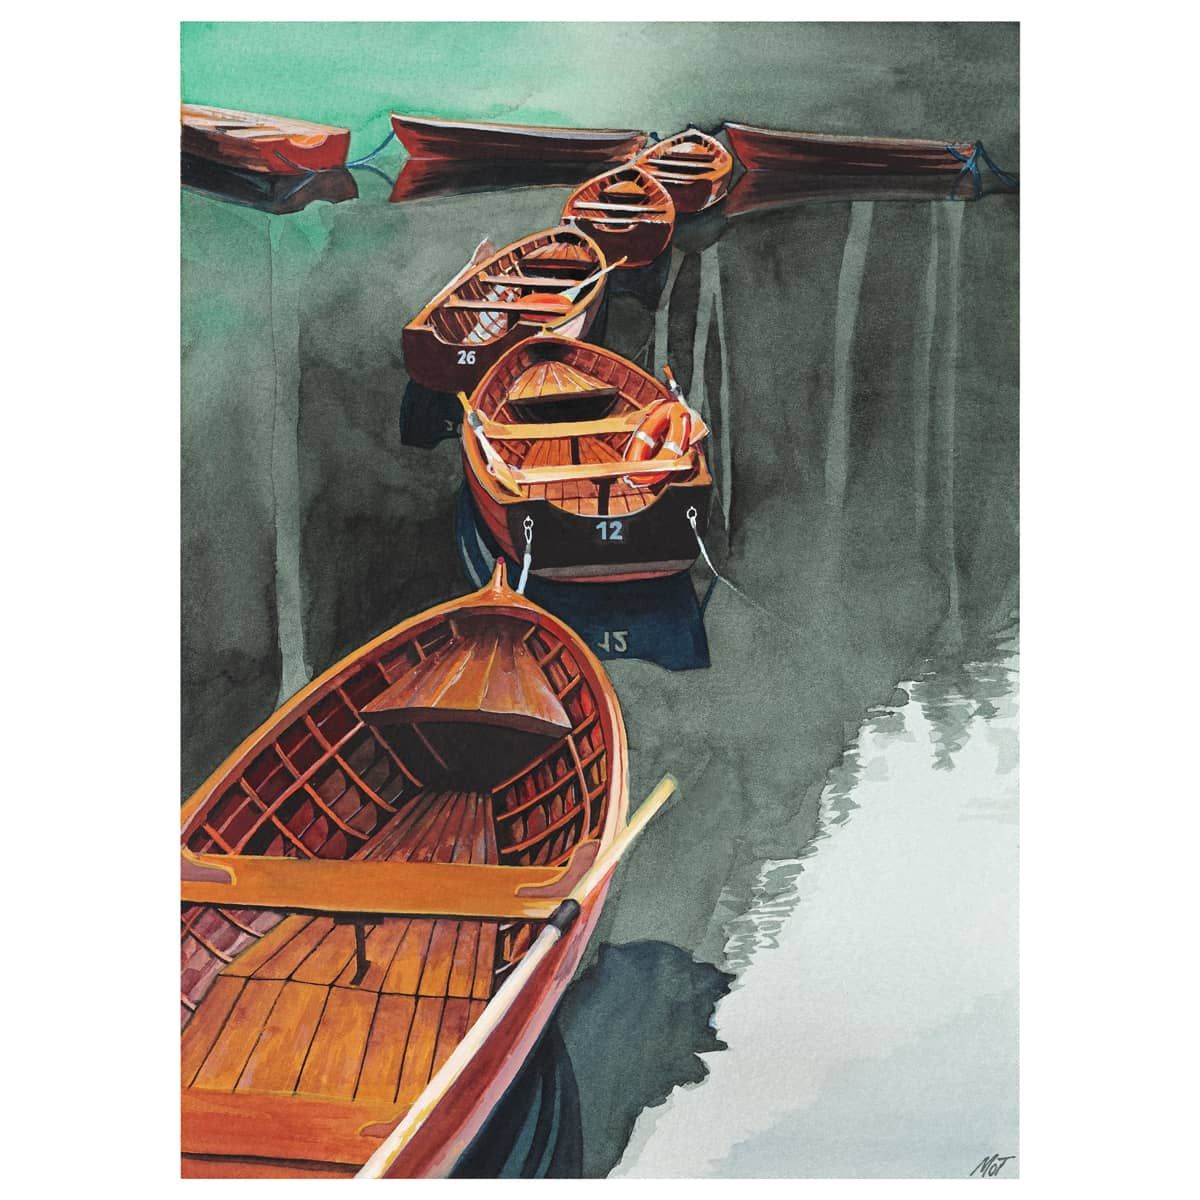 Cover artwork of boats by Jerry’s resident artist, Mot Tuman